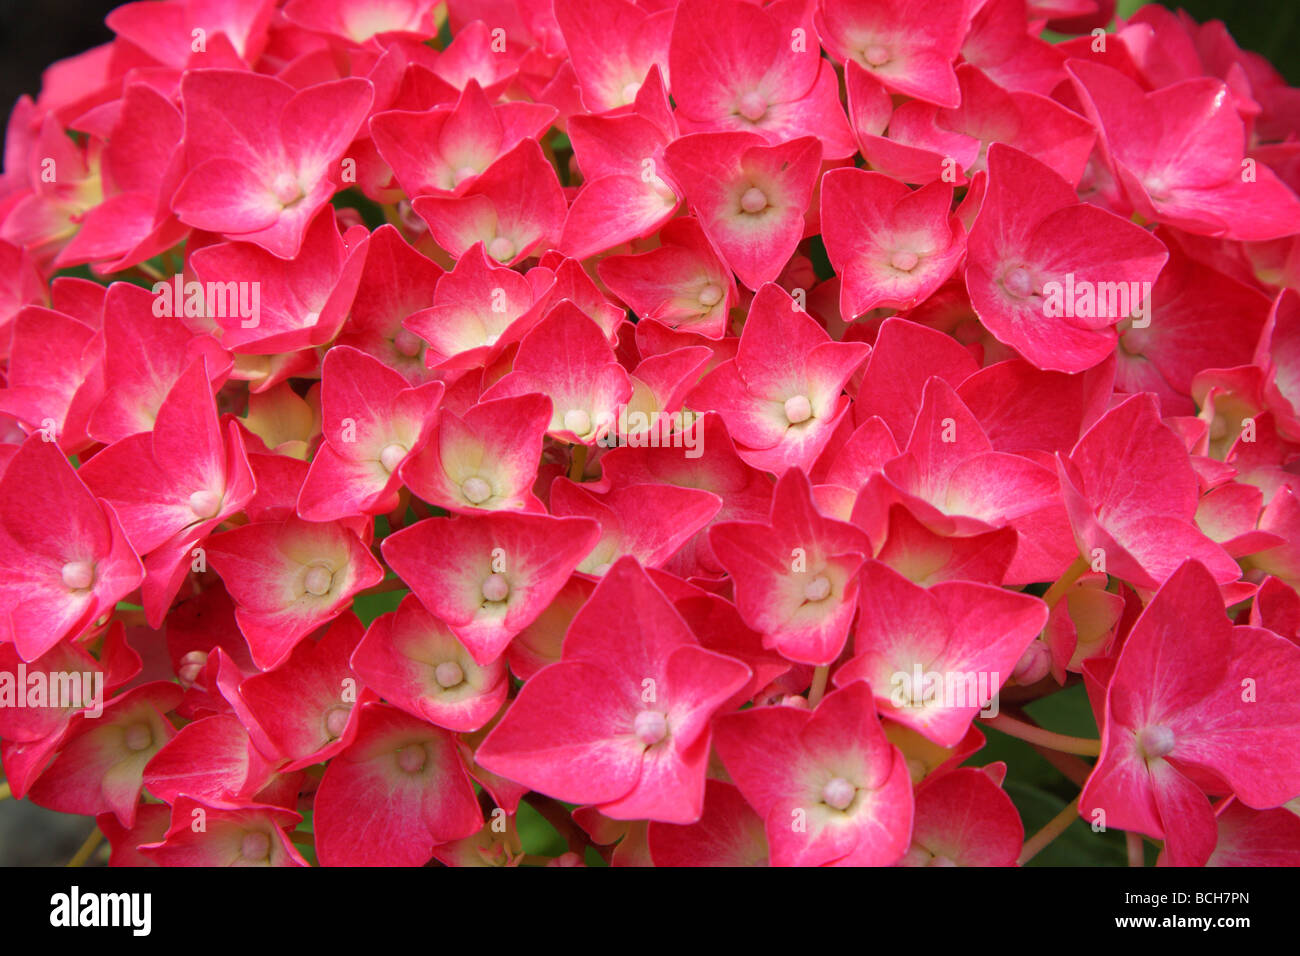 Red hydrangea flowers close up Stock Photo